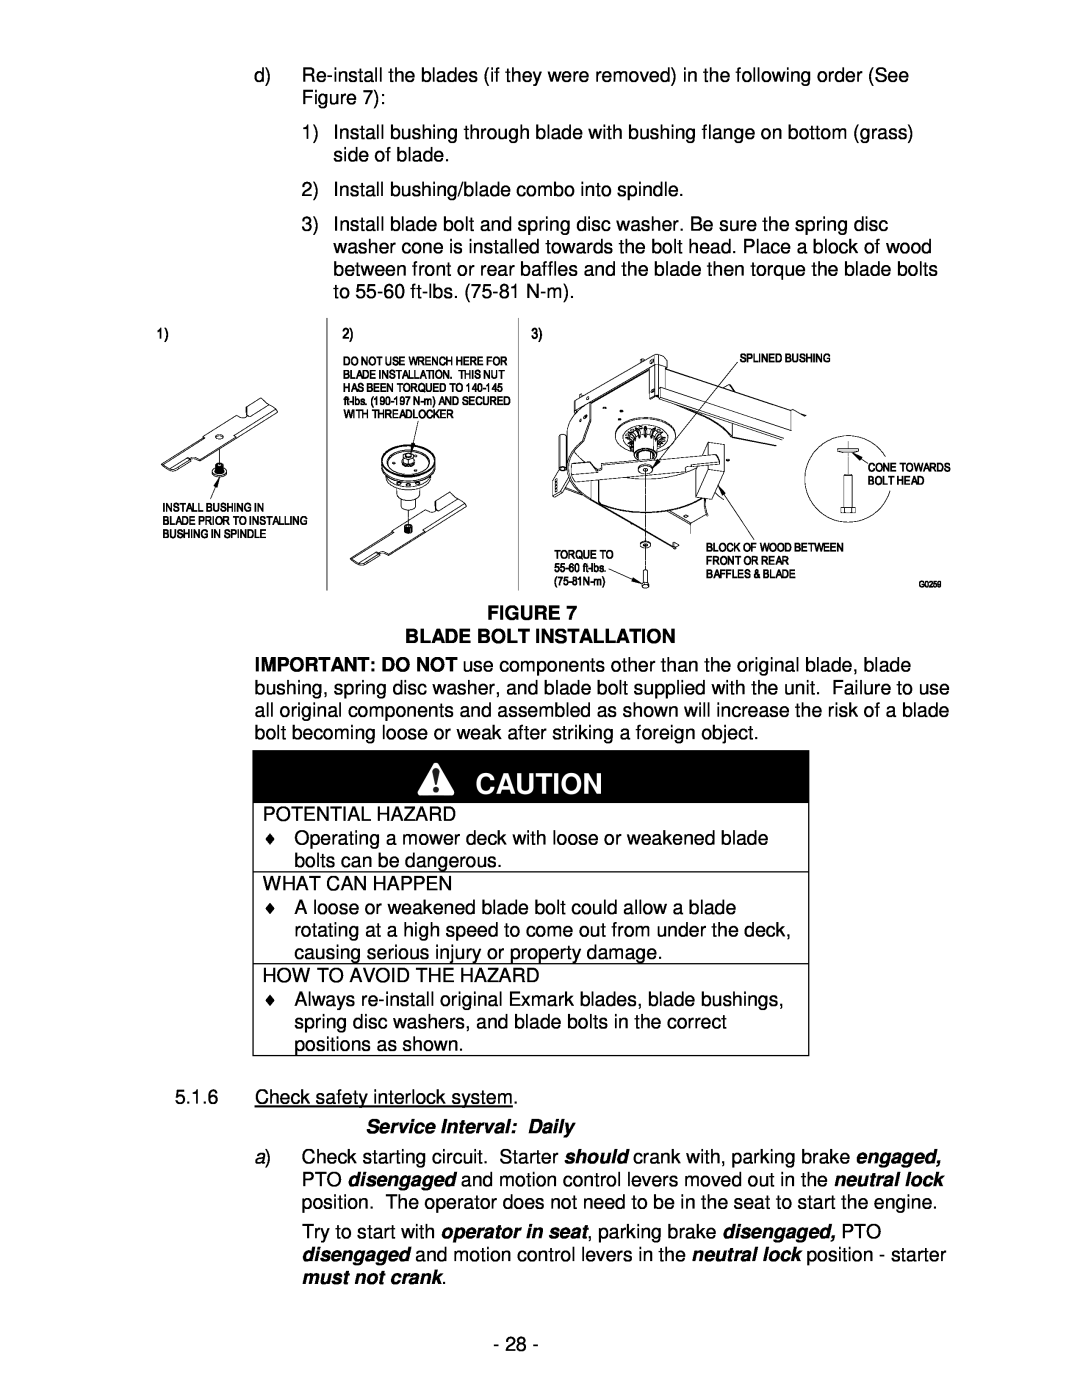 Exmark LAZER Z HP manual Figure Blade Bolt Installation, Service Interval Daily 